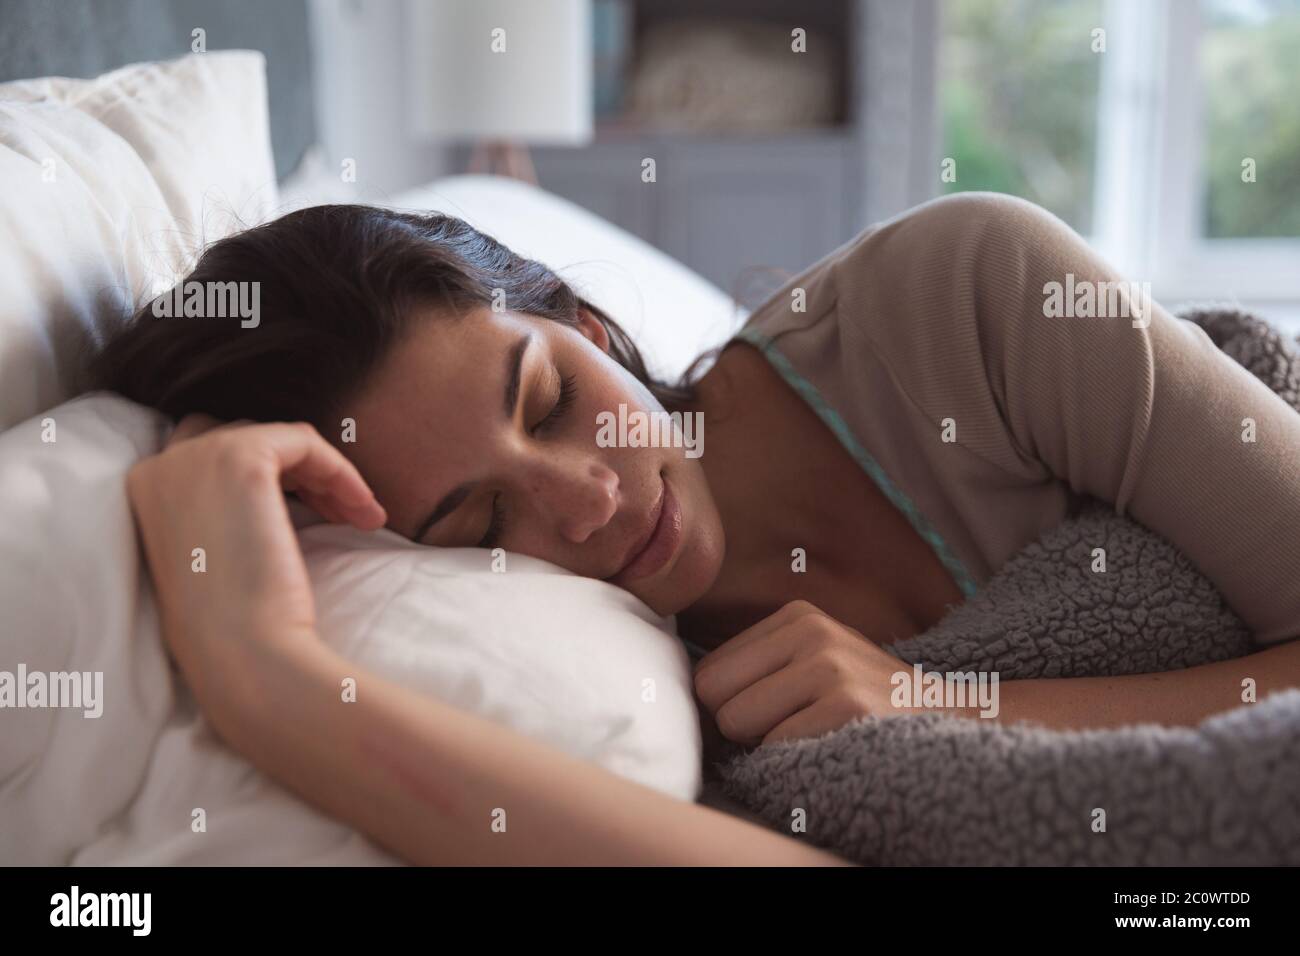 Mixed race woman lying on bed during coronavirus covid19 pandemic Stock Photo